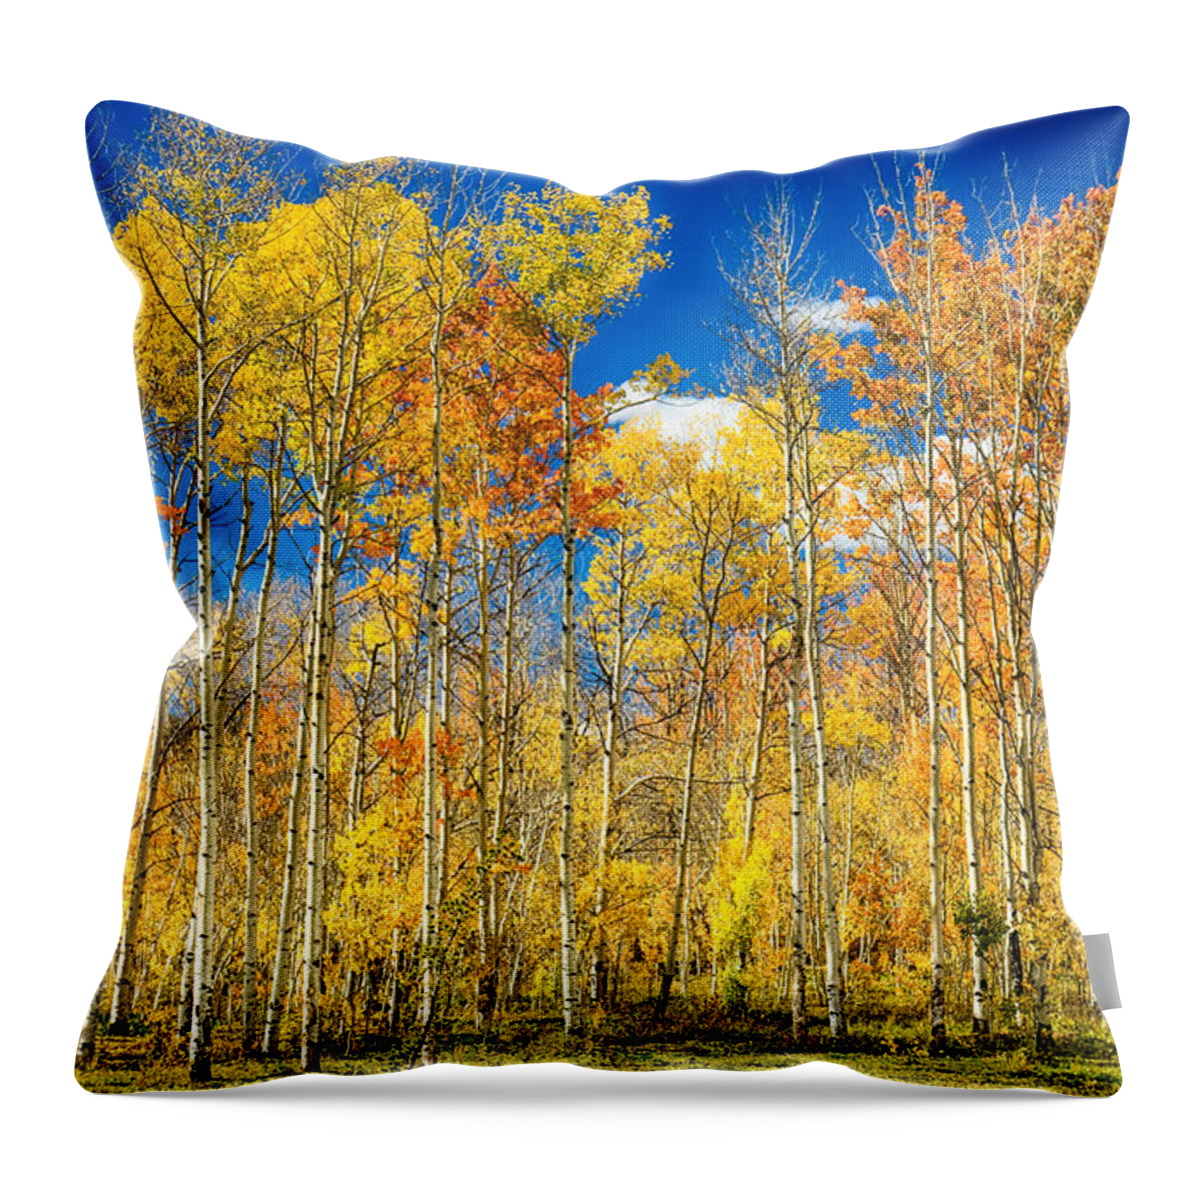 Aspen Throw Pillow featuring the photograph Colorful Colorado Autumn Aspen Trees by James BO Insogna